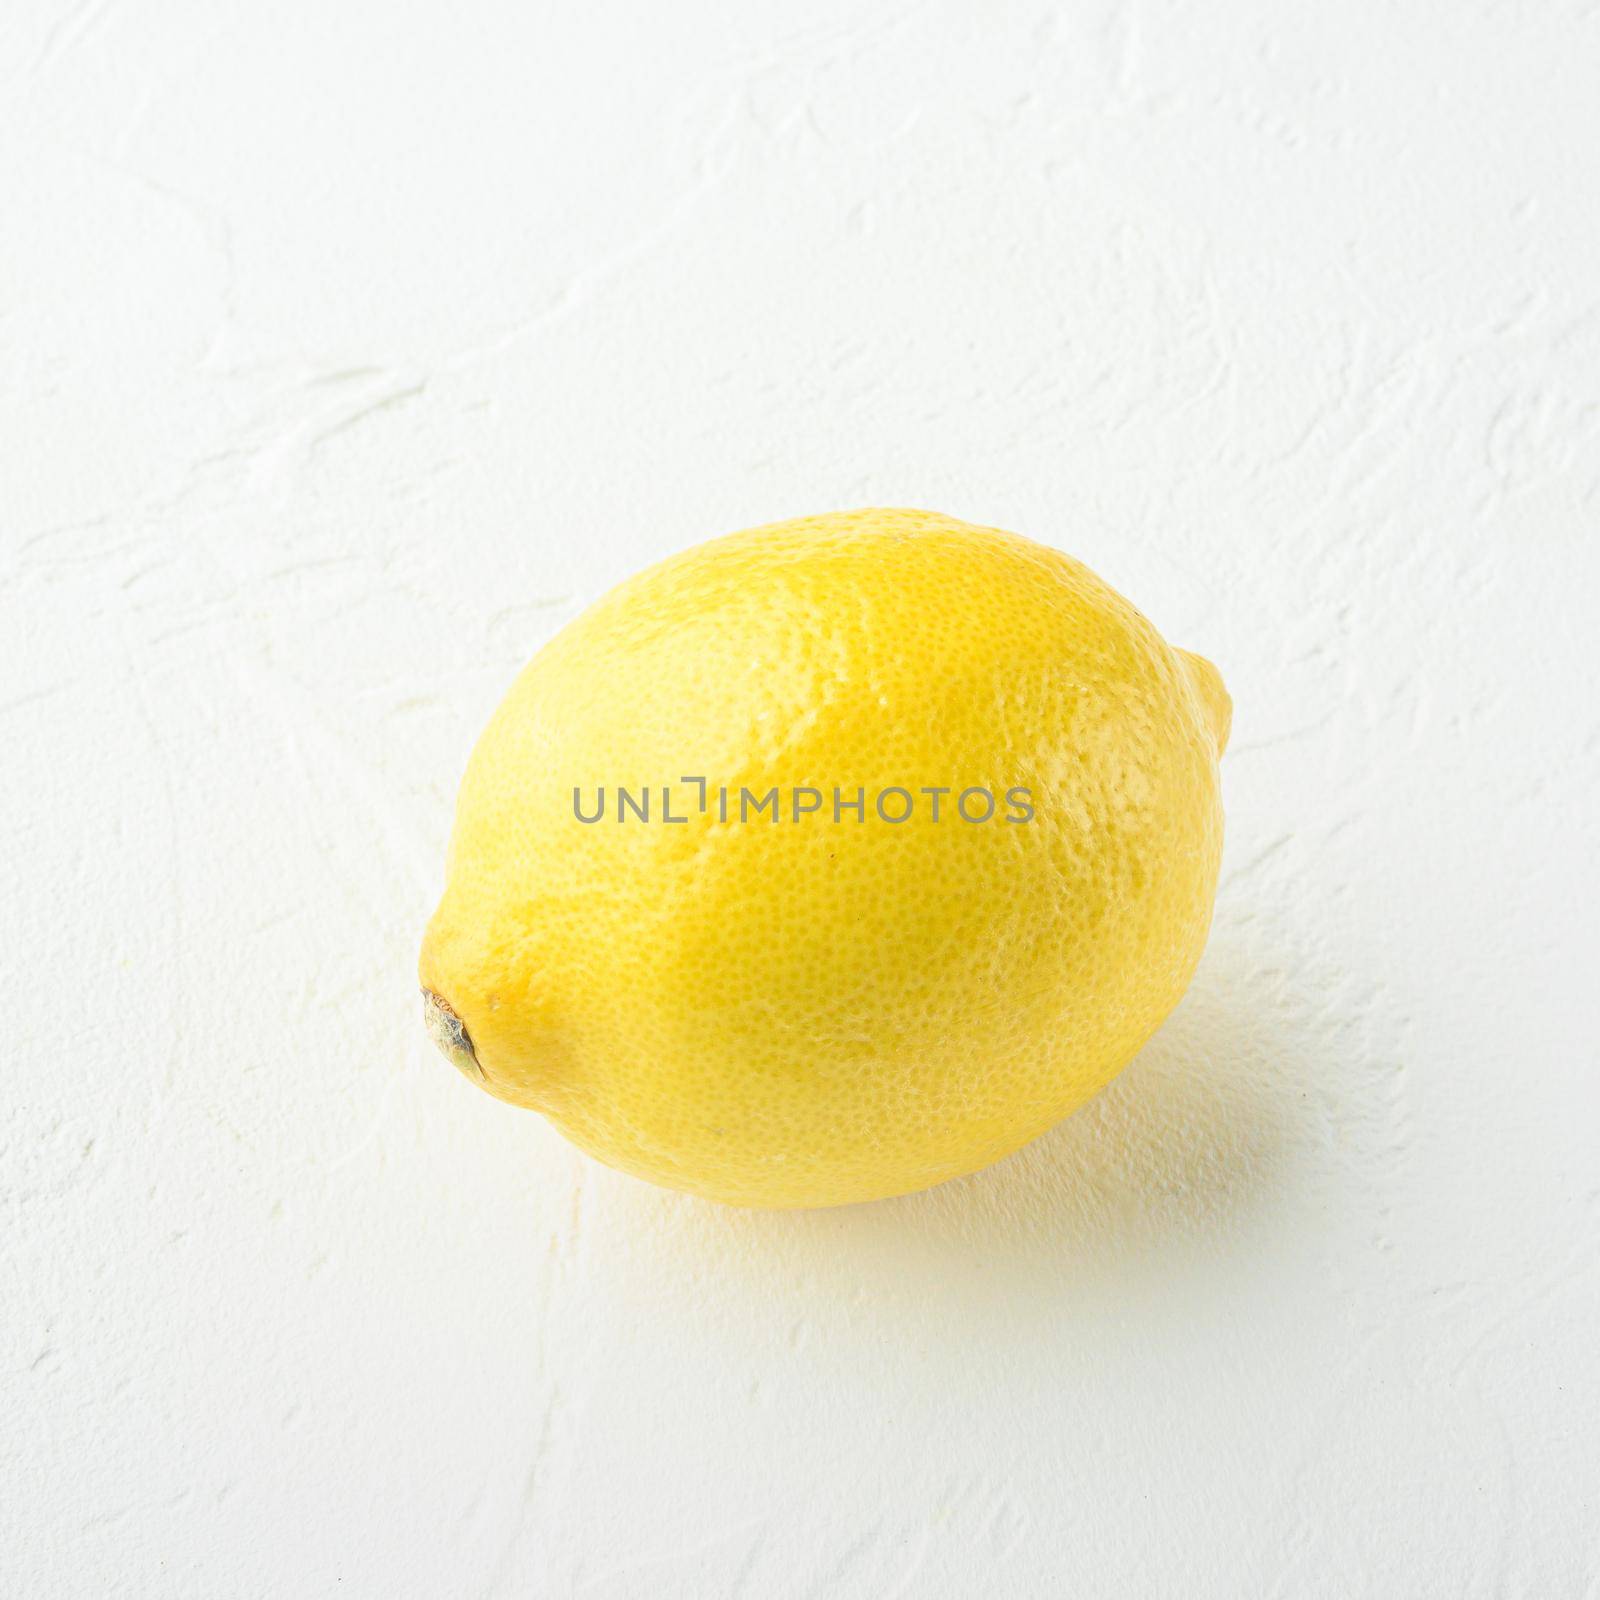 Ripe yellow lemon set, square format, on white stone background